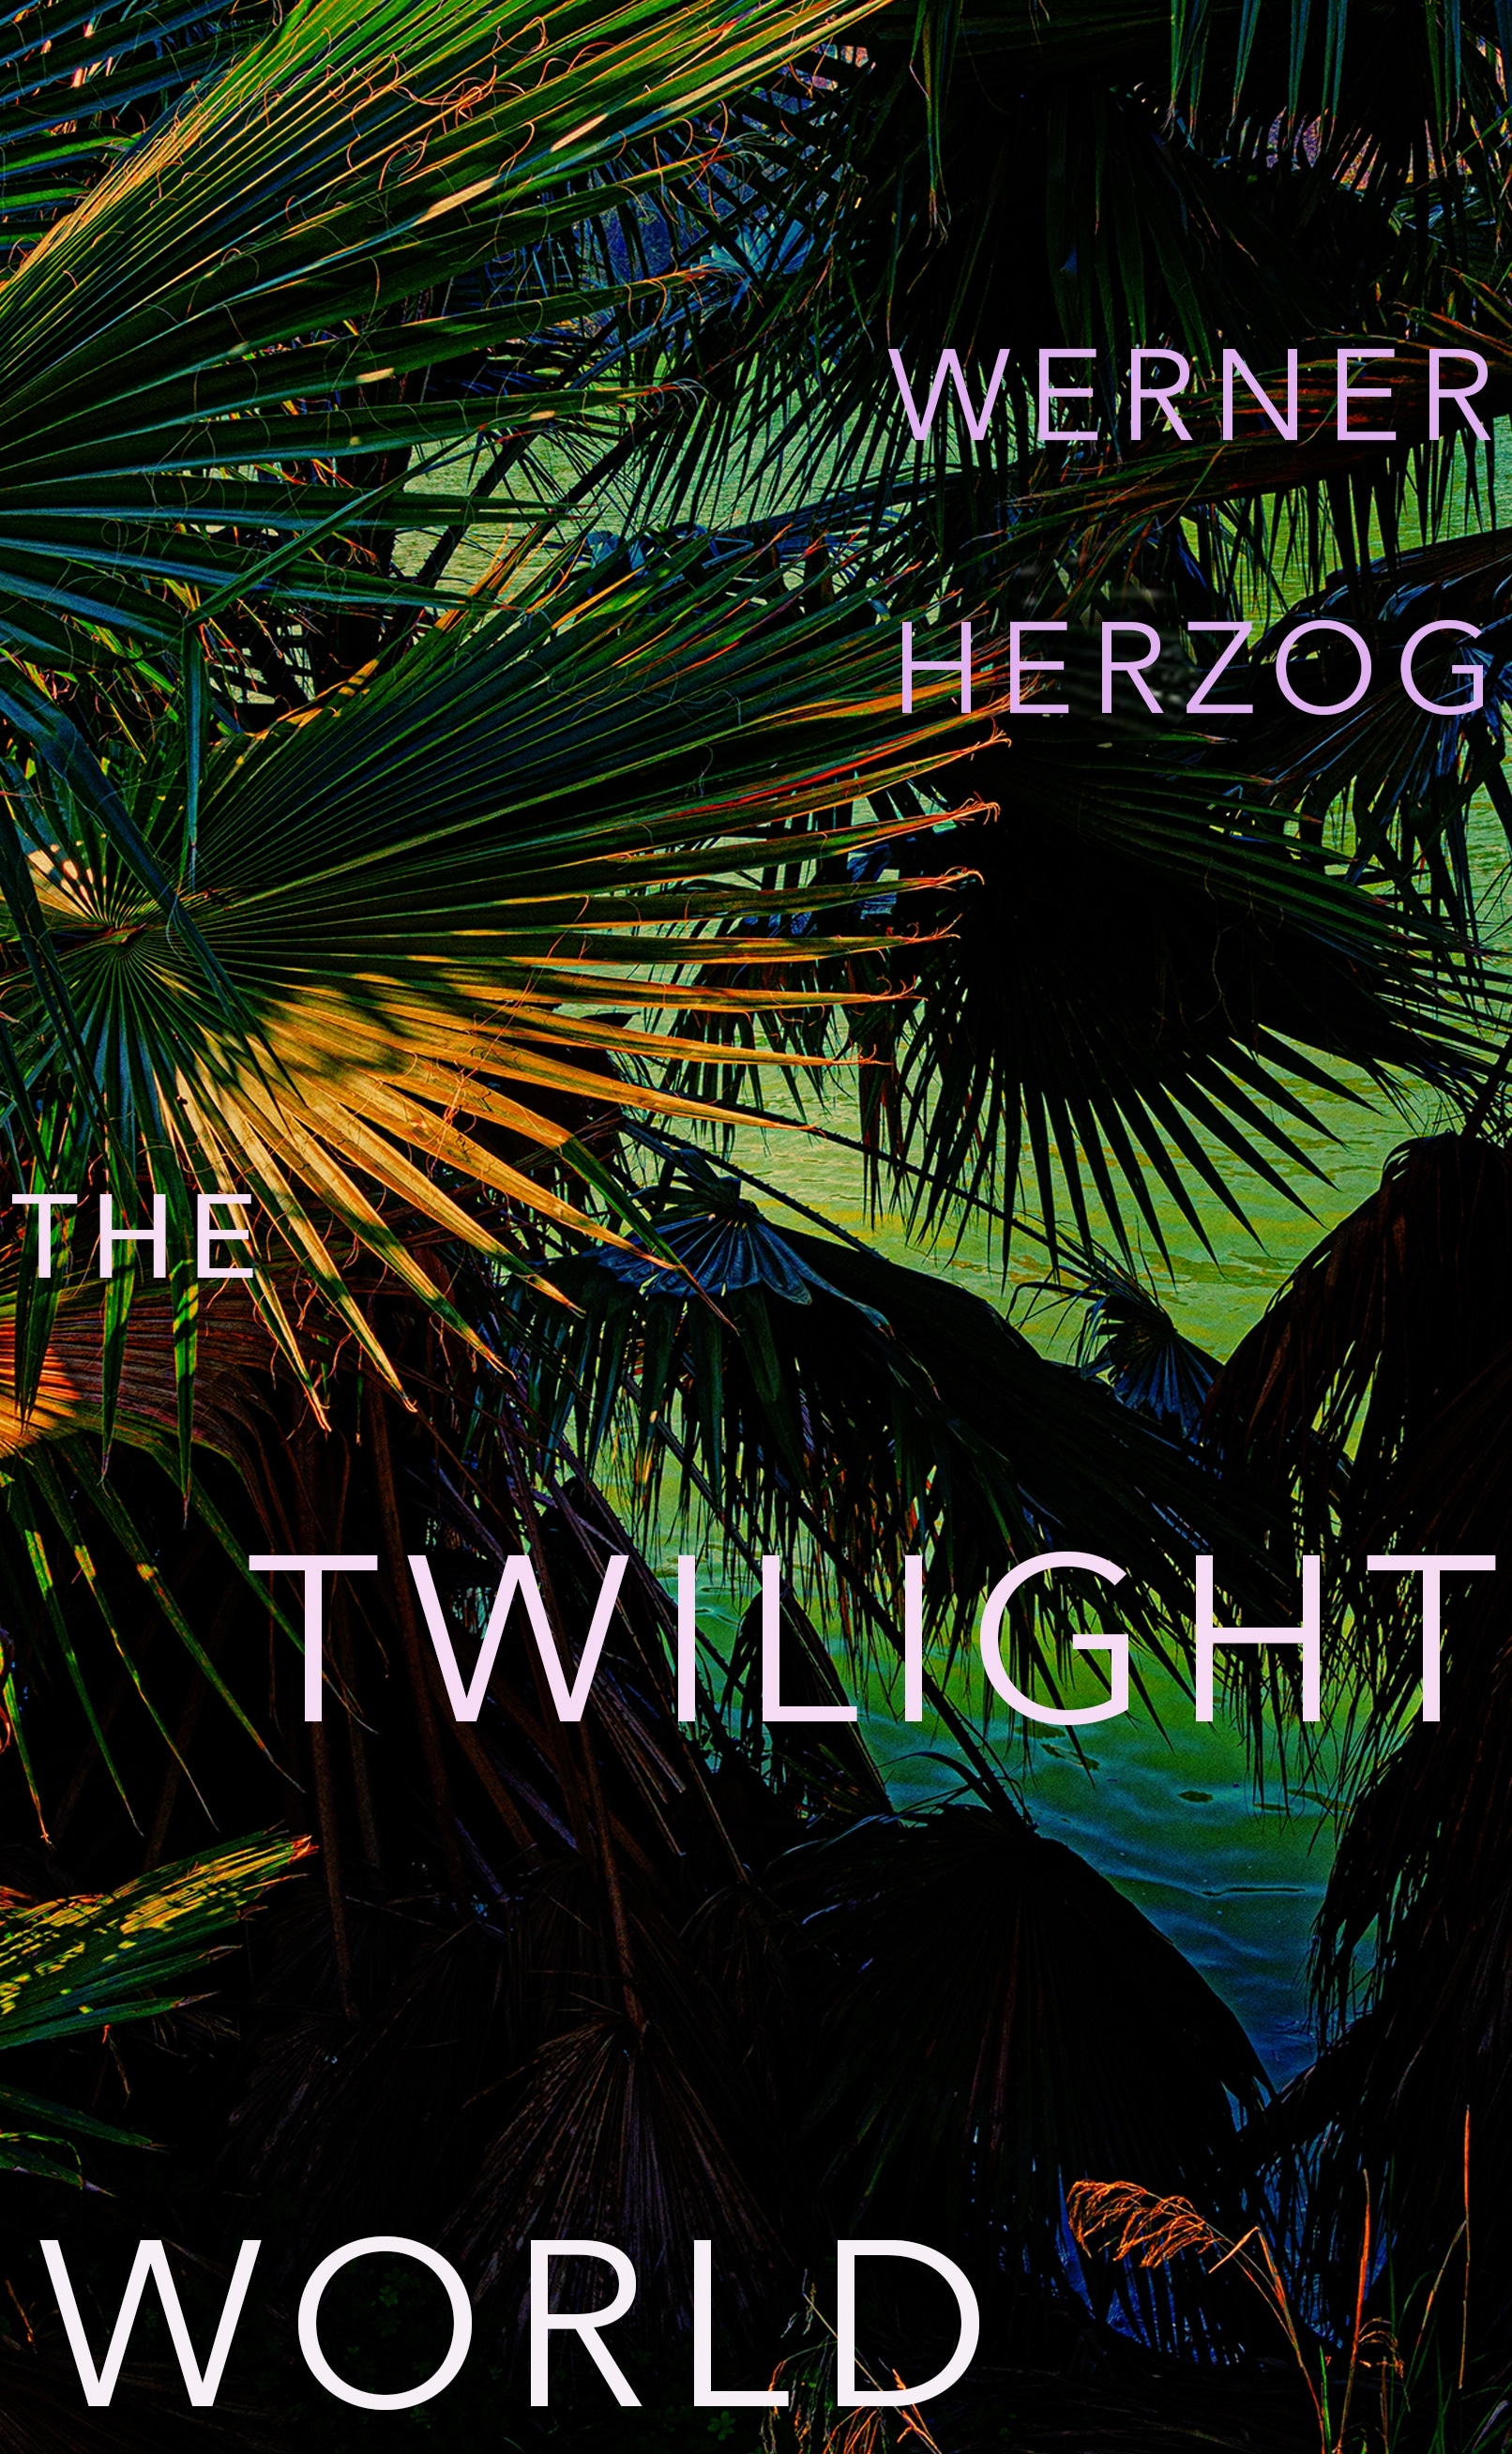 Book “The Twilight World” by Werner Herzog — July 7, 2022